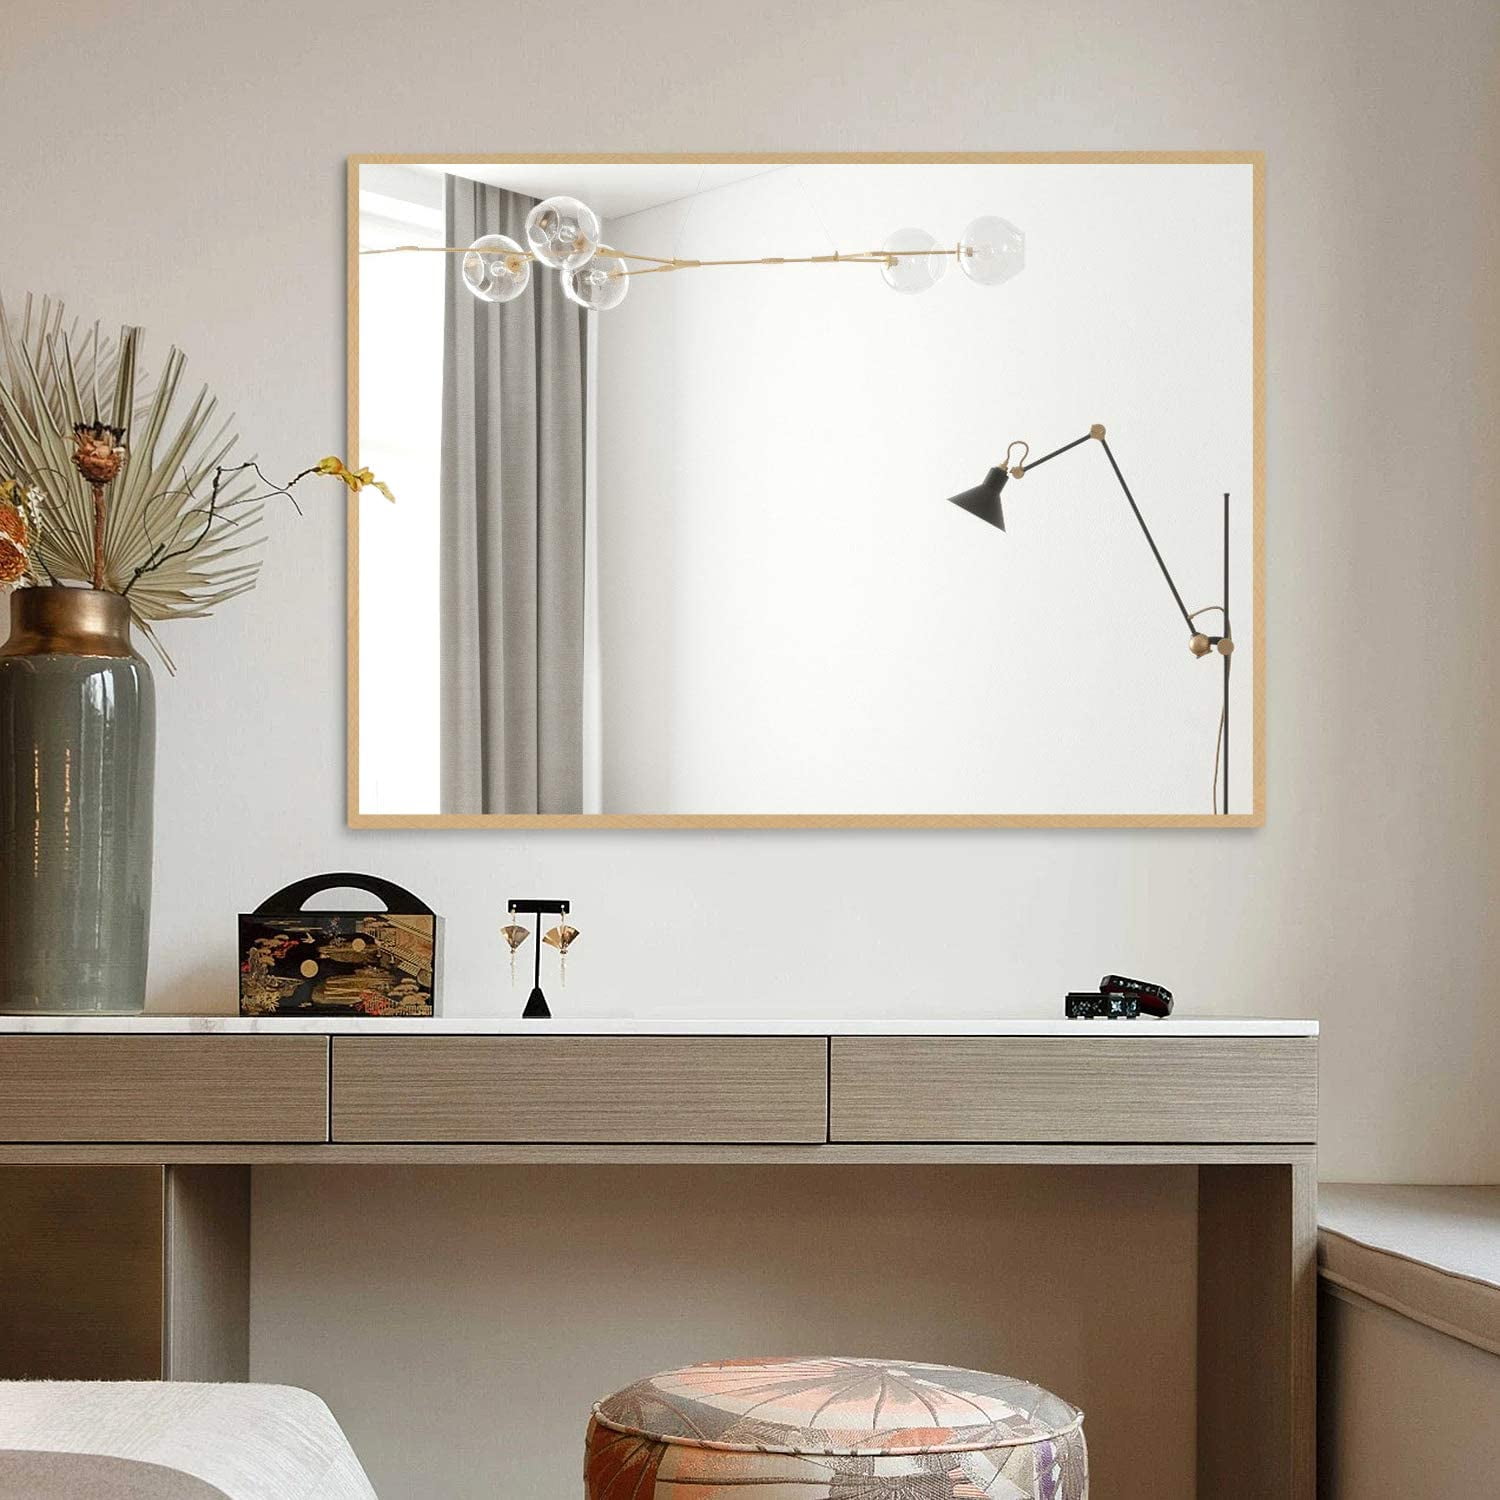 Mirrors for Wall Decor Rectangular Mirror Bathroom Wall Mounted Make Up